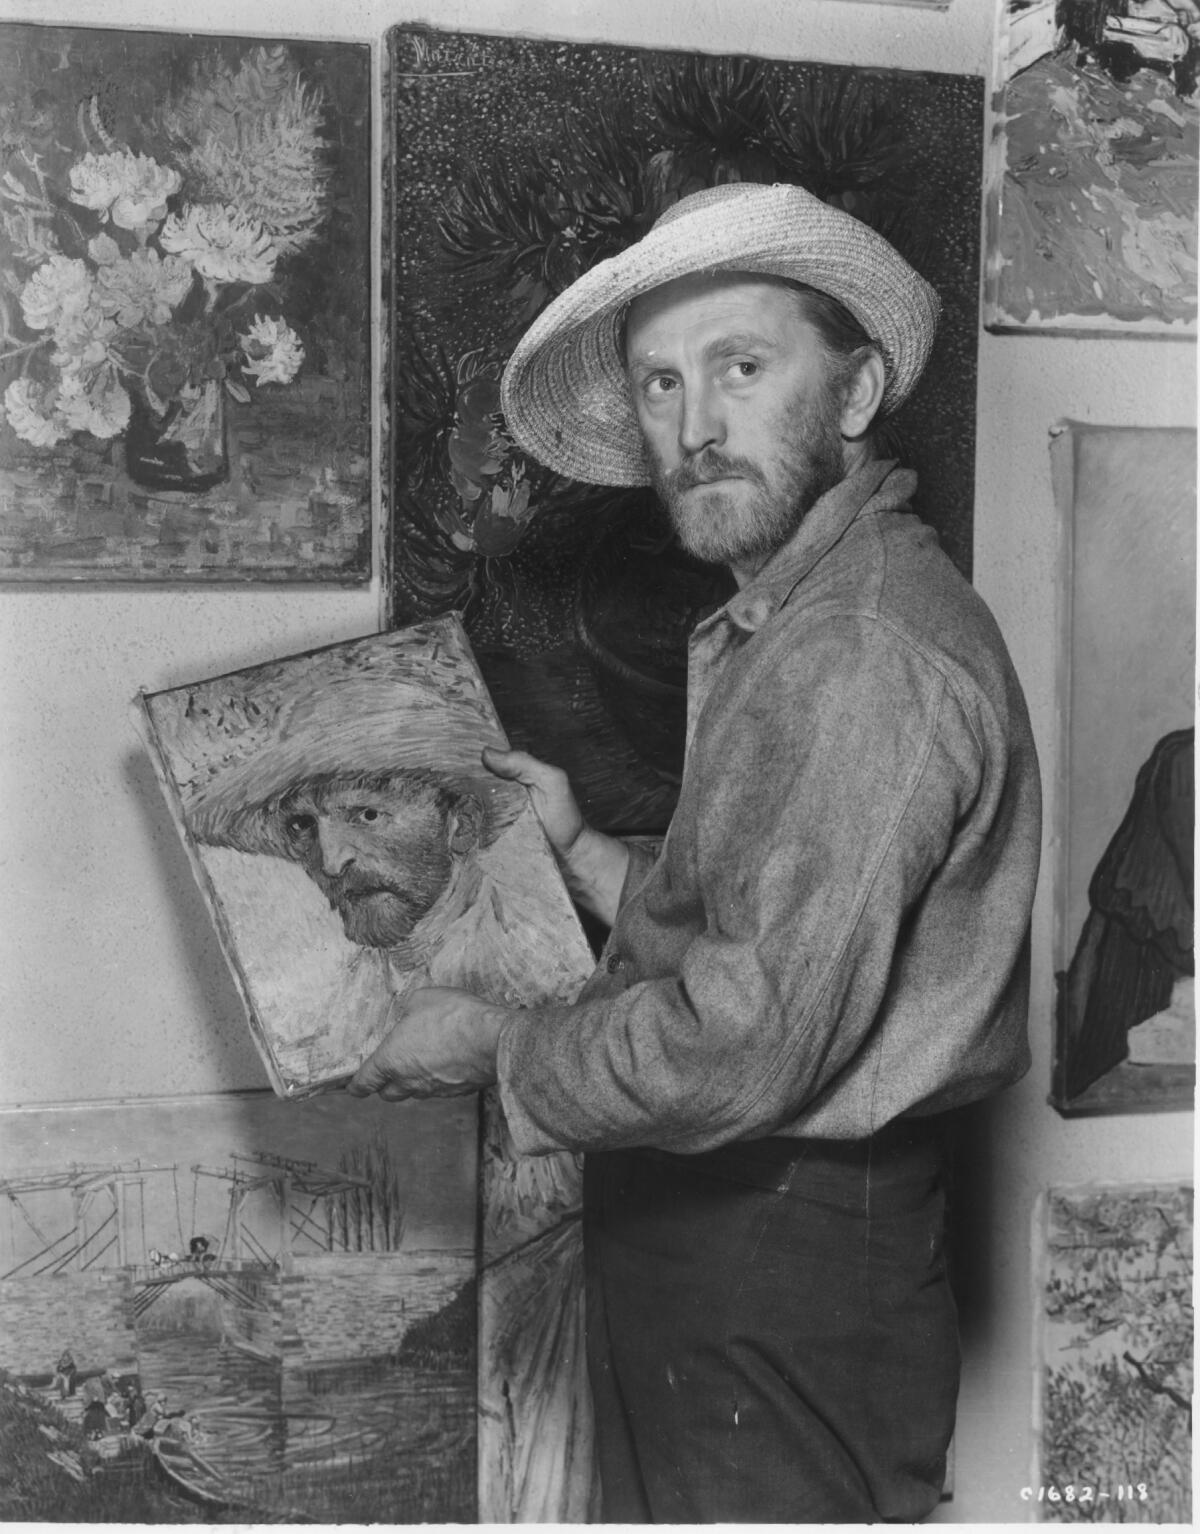 Kirk Douglas as Vincent van Gogh in "Lust for Life" (1955).